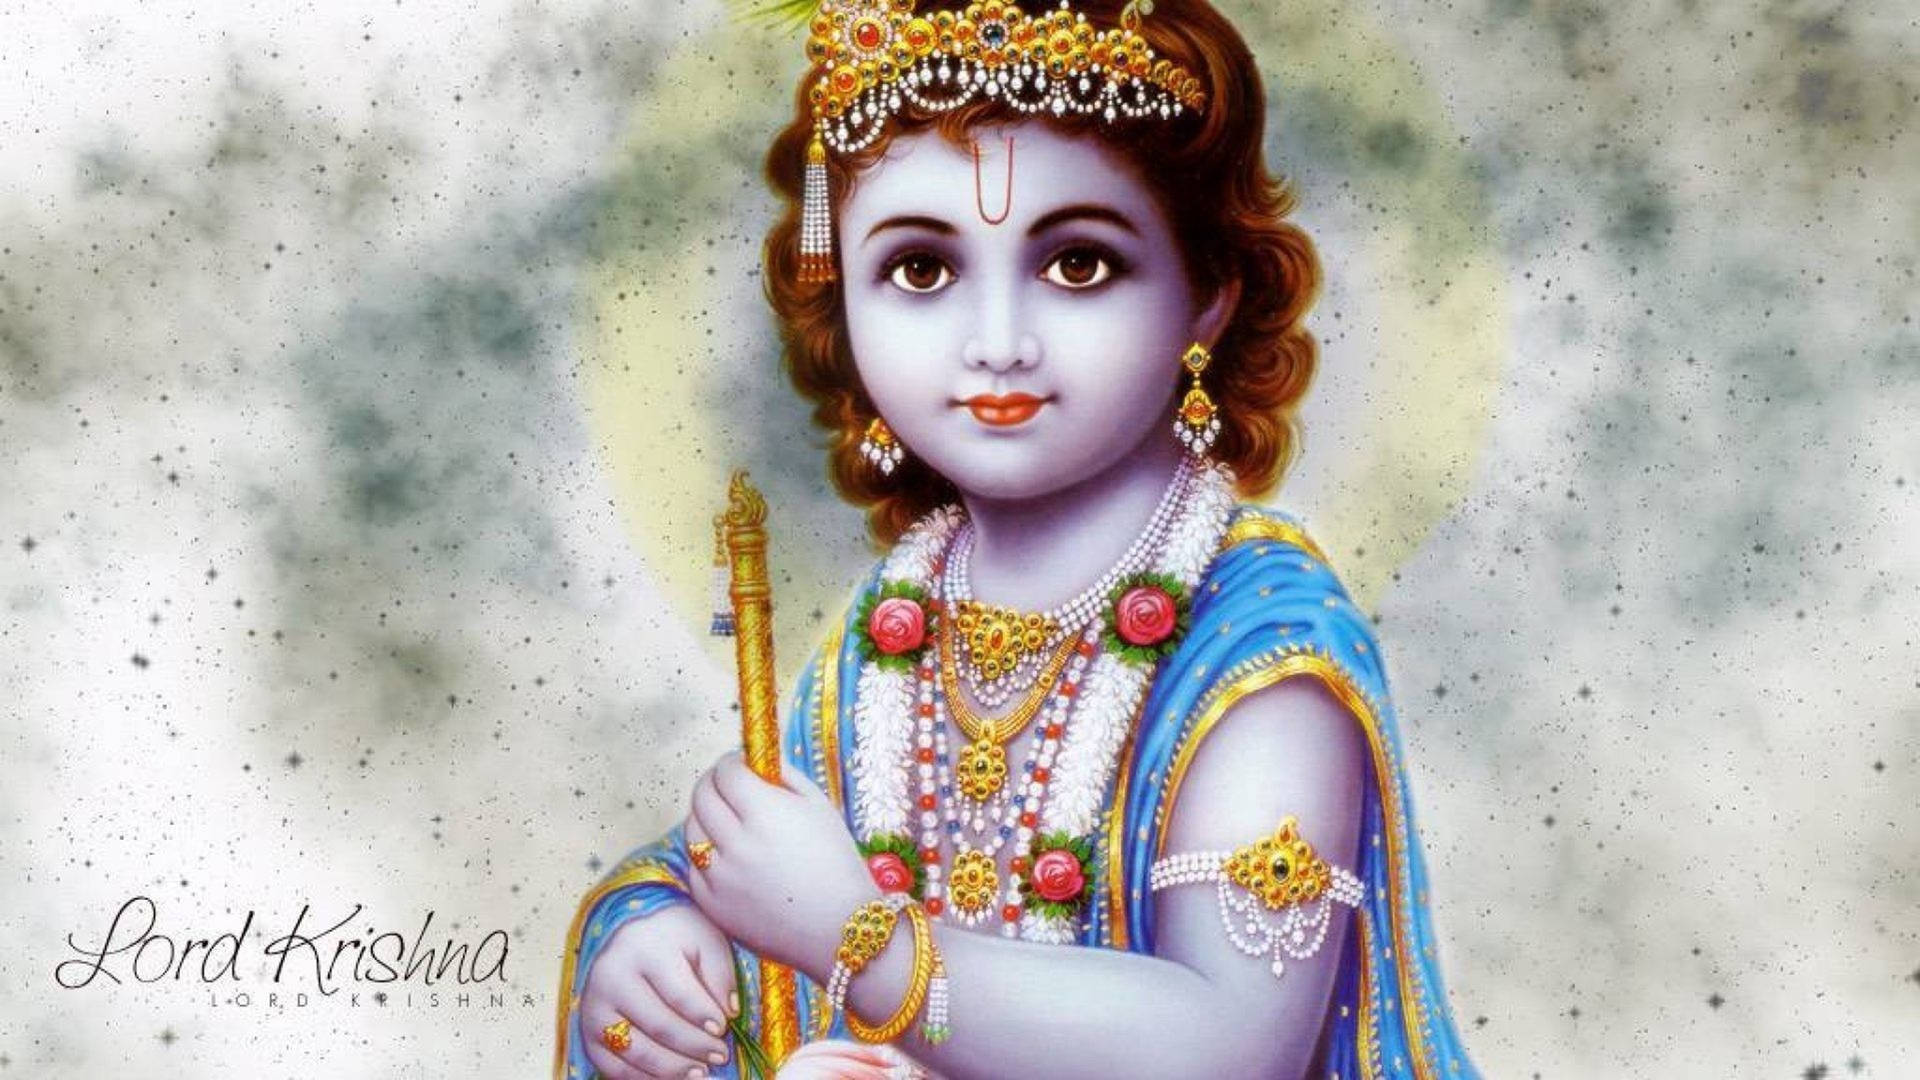 Young Lord Krishna 4k Digital Art Background